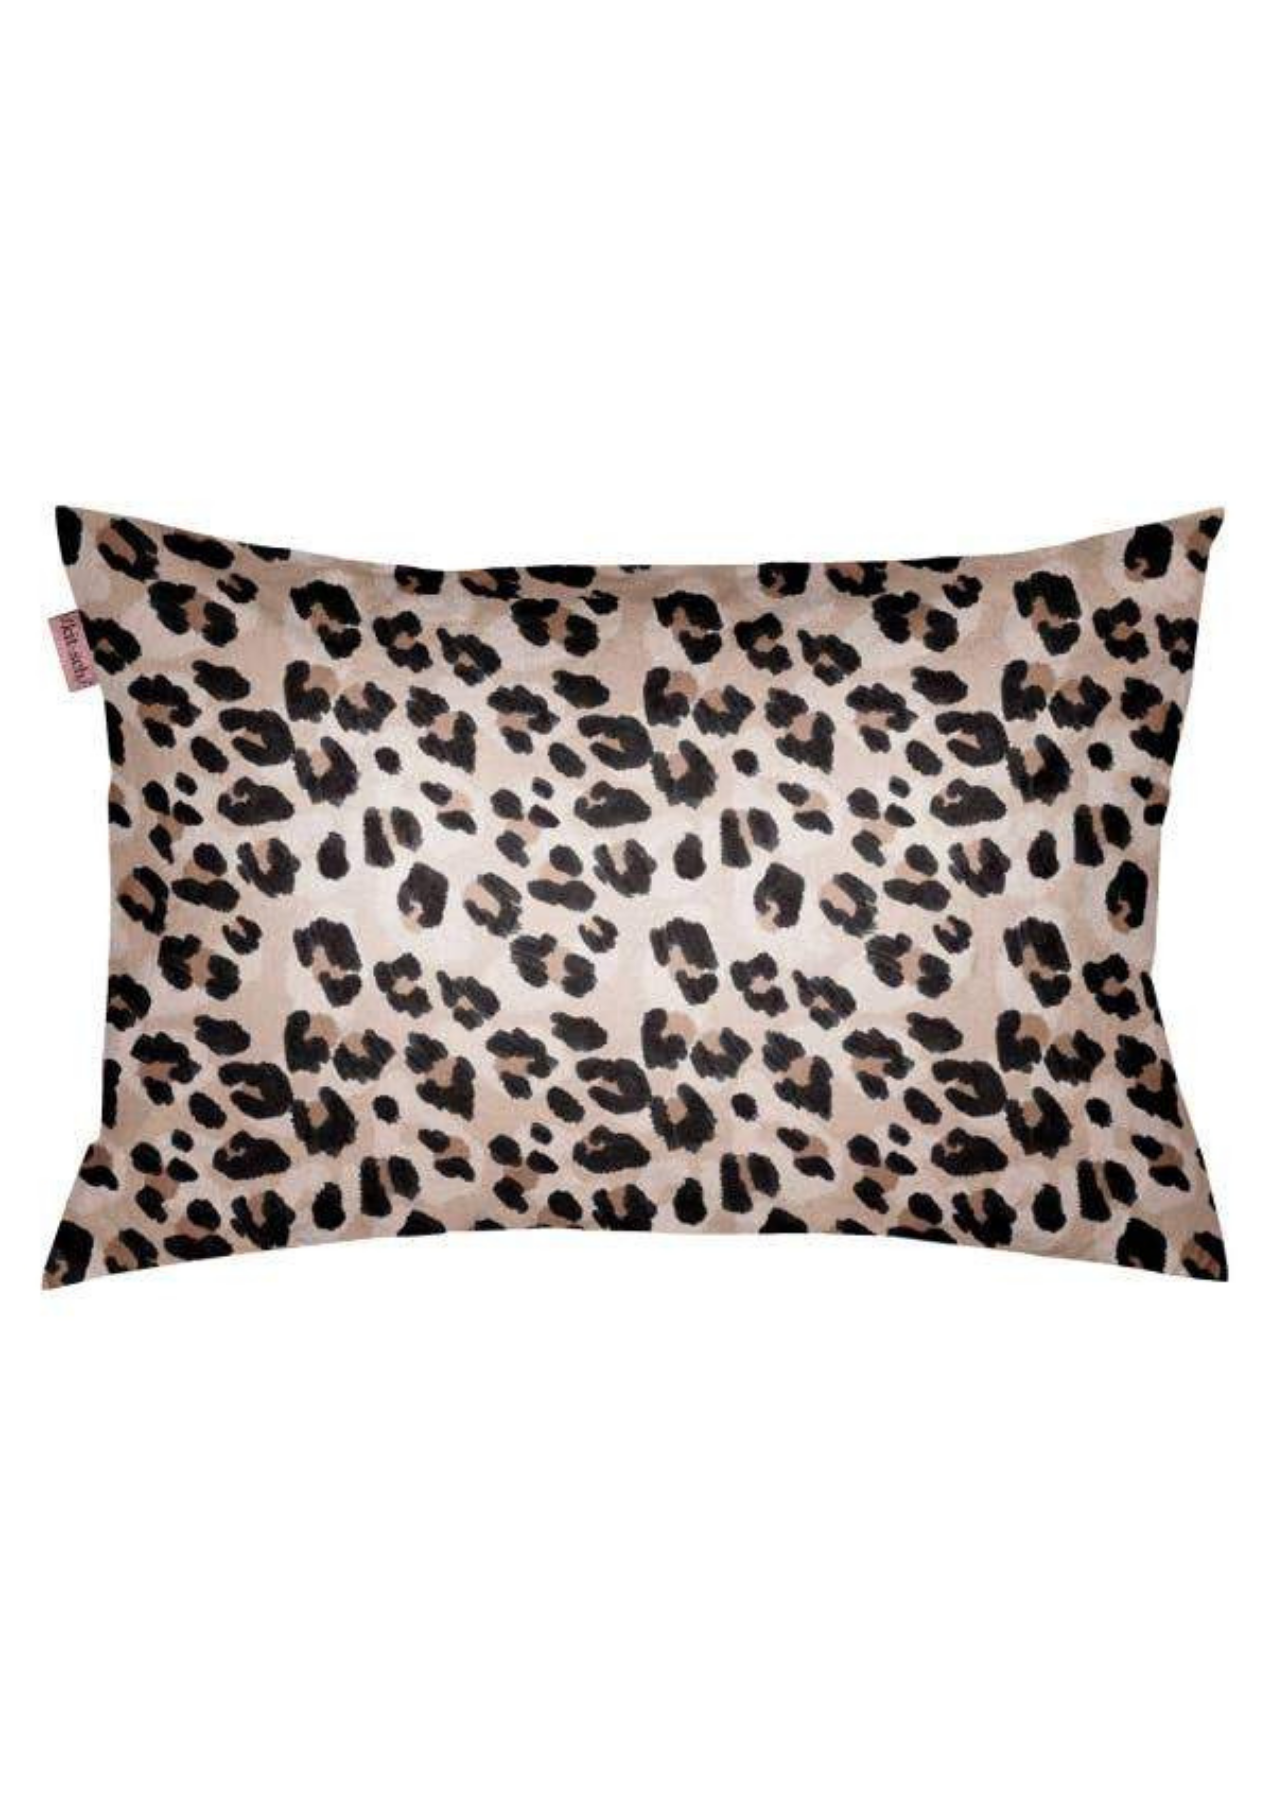 Leopard Towel Pillow Cover